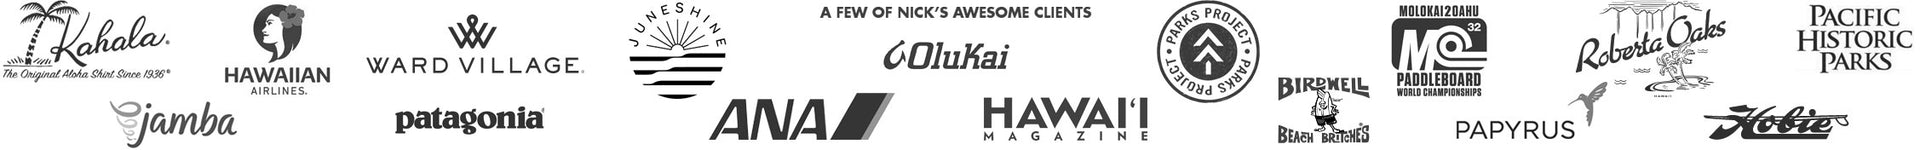 Nick Kuchar Portfolio Customer Client List